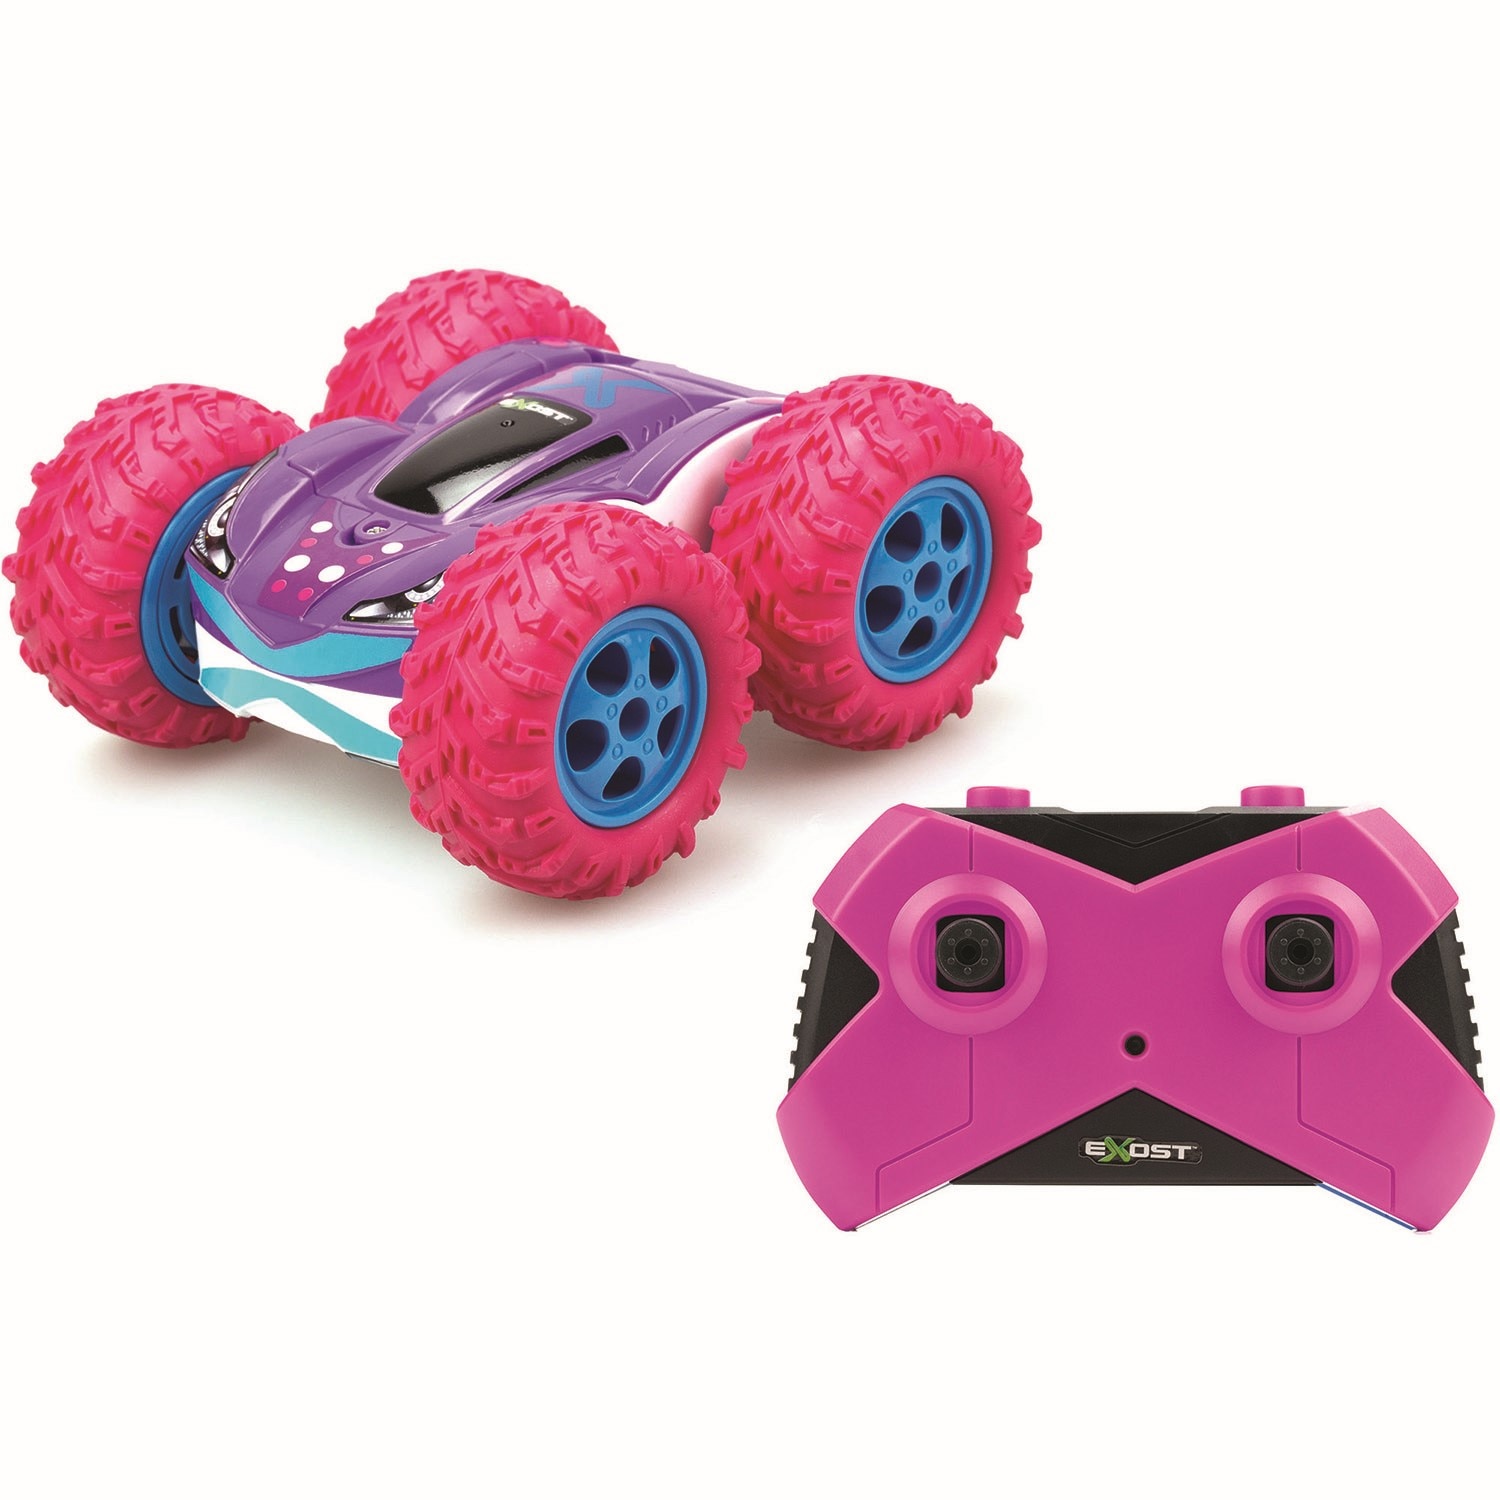 EXOST™ 360 TORNADO Remote Control Car TVC by Silverlit Toys 